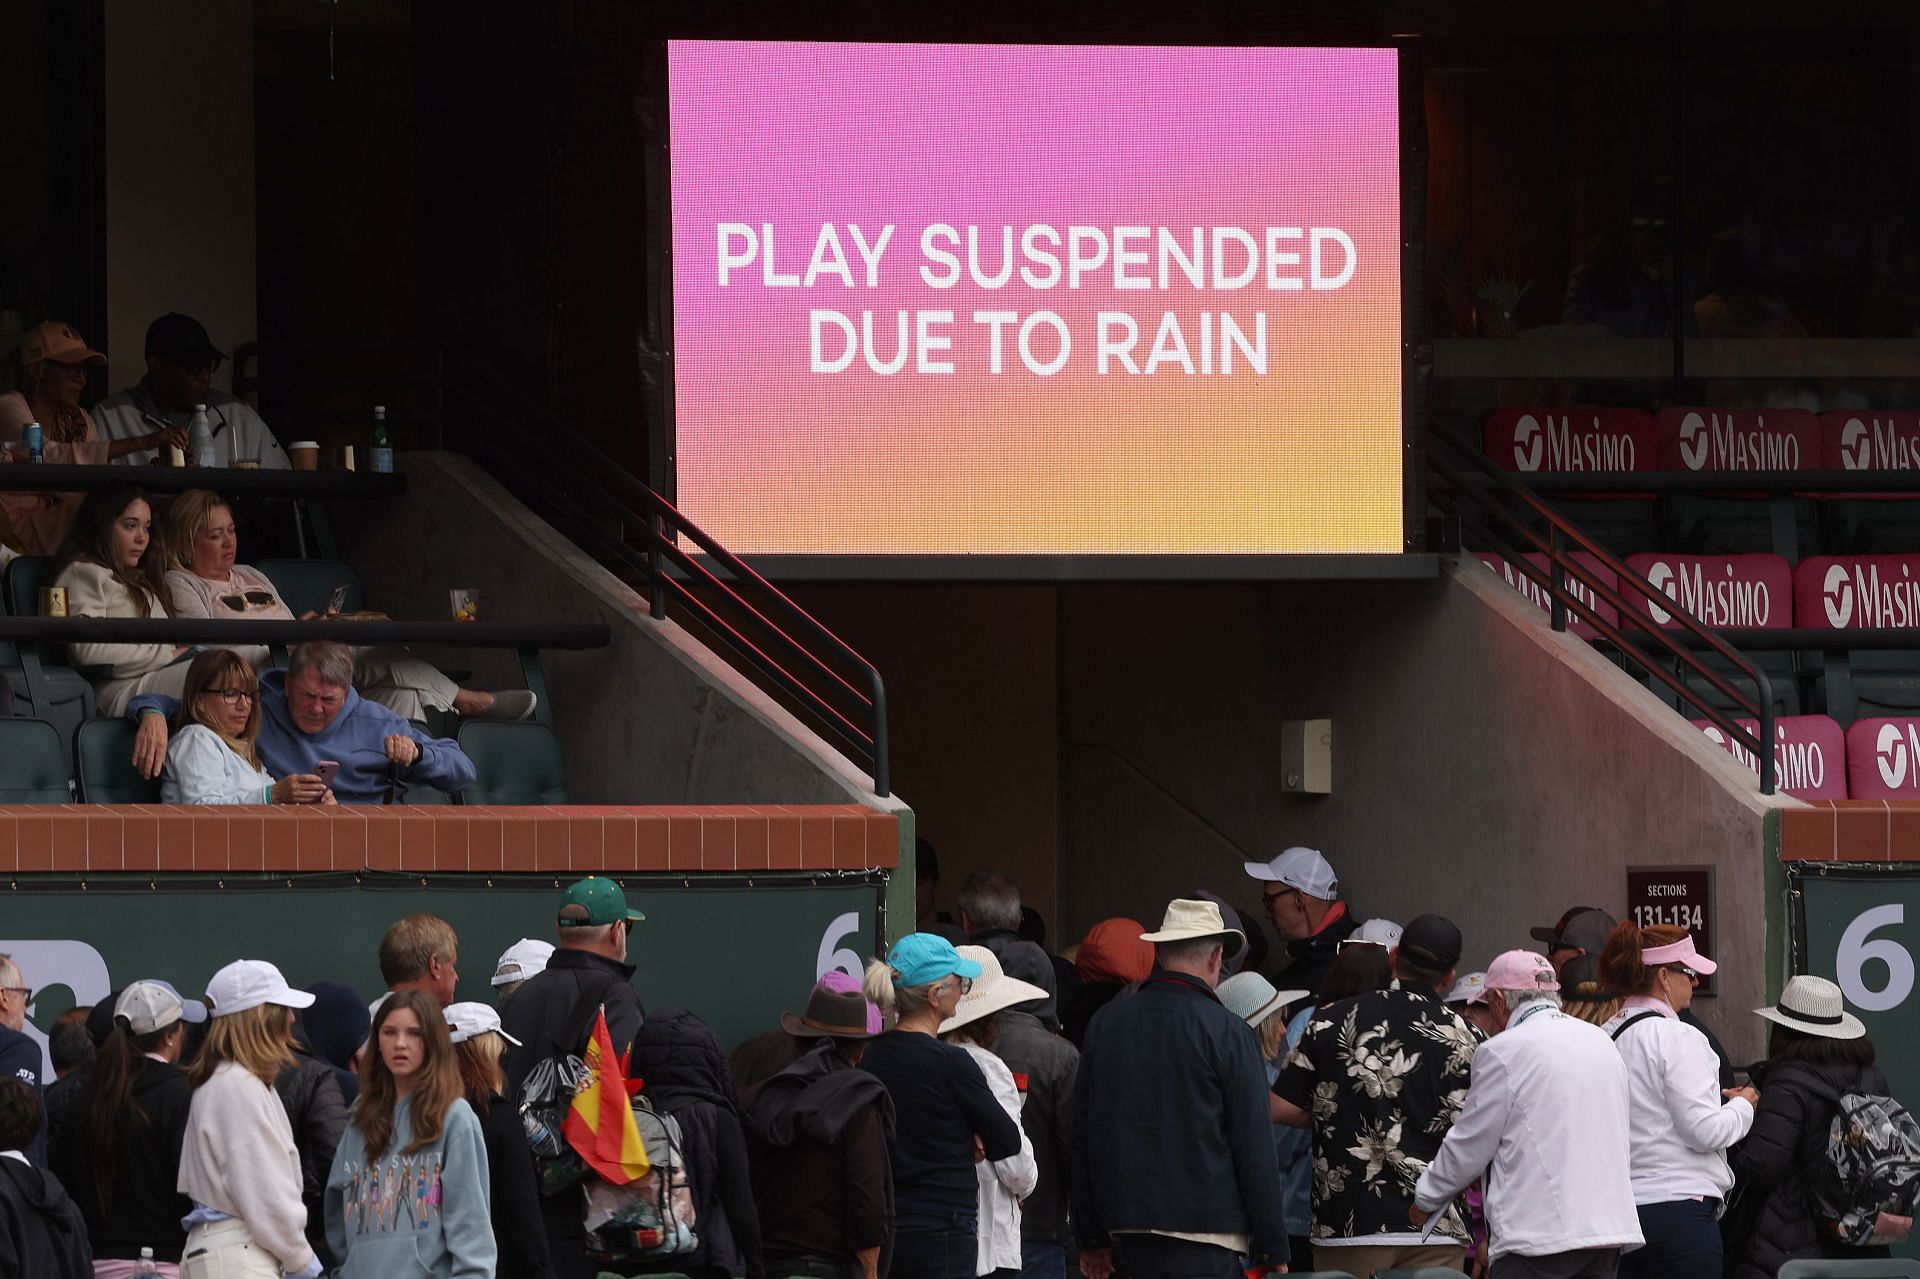 Spectators leave the stands during the rain-hit semifinal between Carlos Alcaraz and Jannik Sinner.